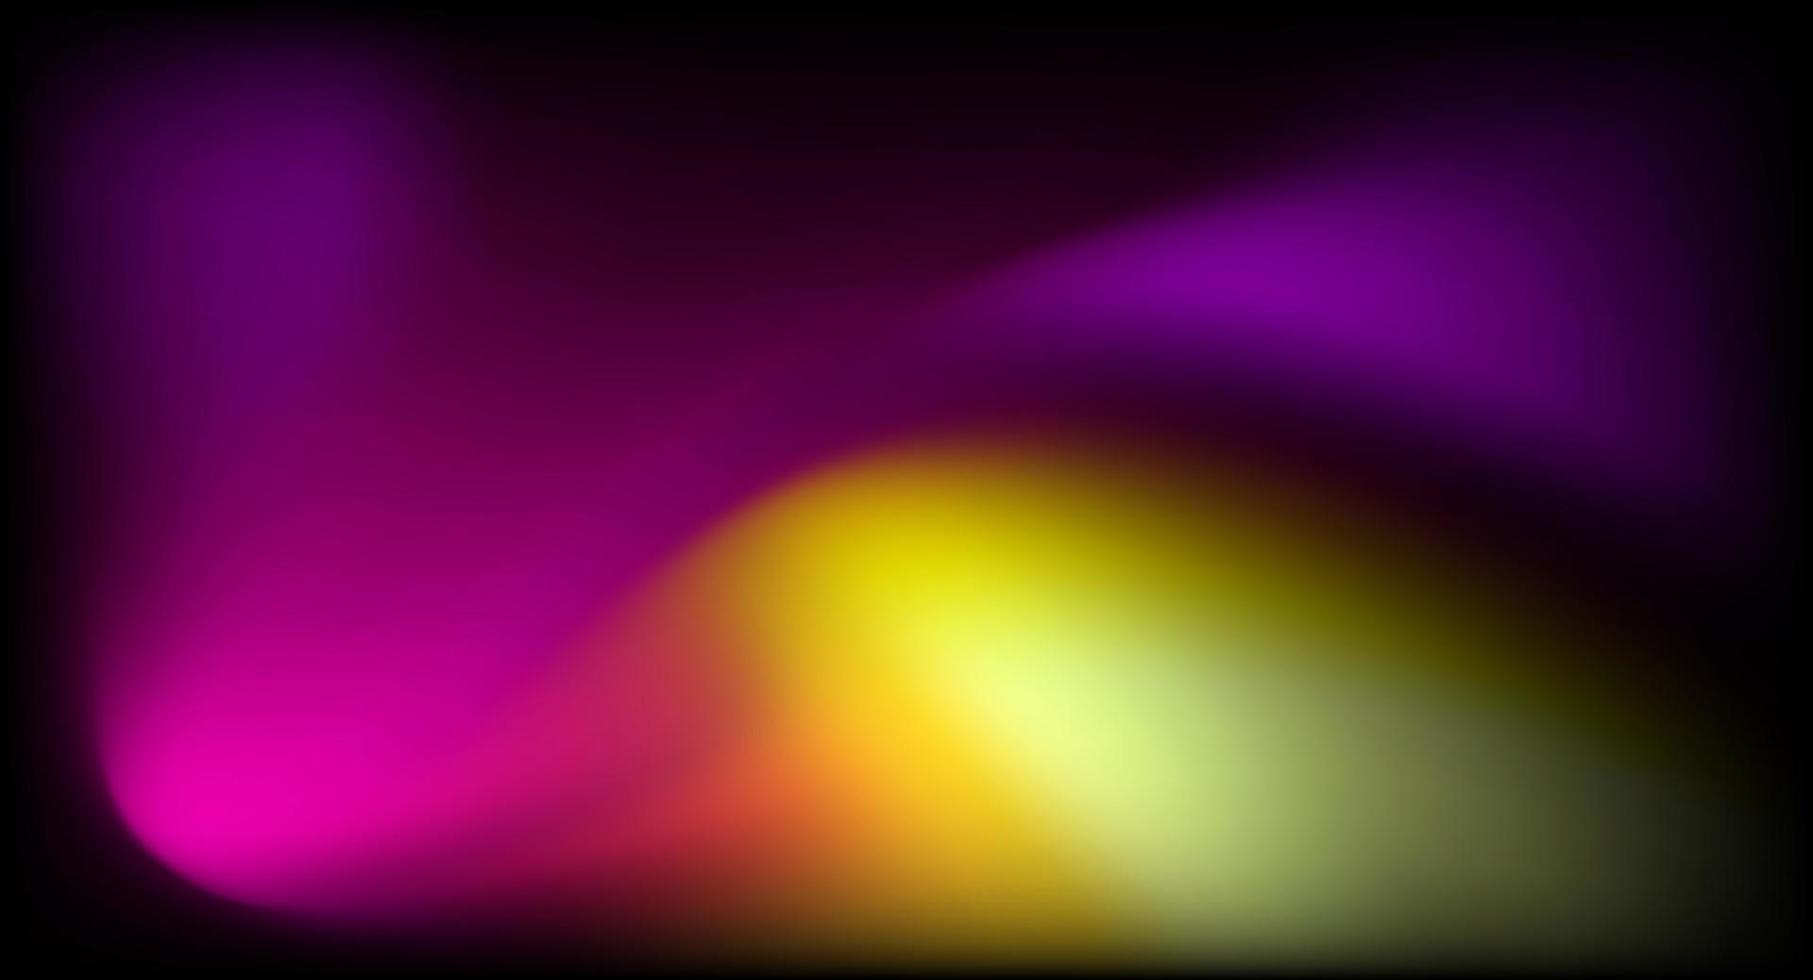 banner futurista de formas onduladas líquidas borrosas abstractas. Fondo de vector de ondas retro brillante